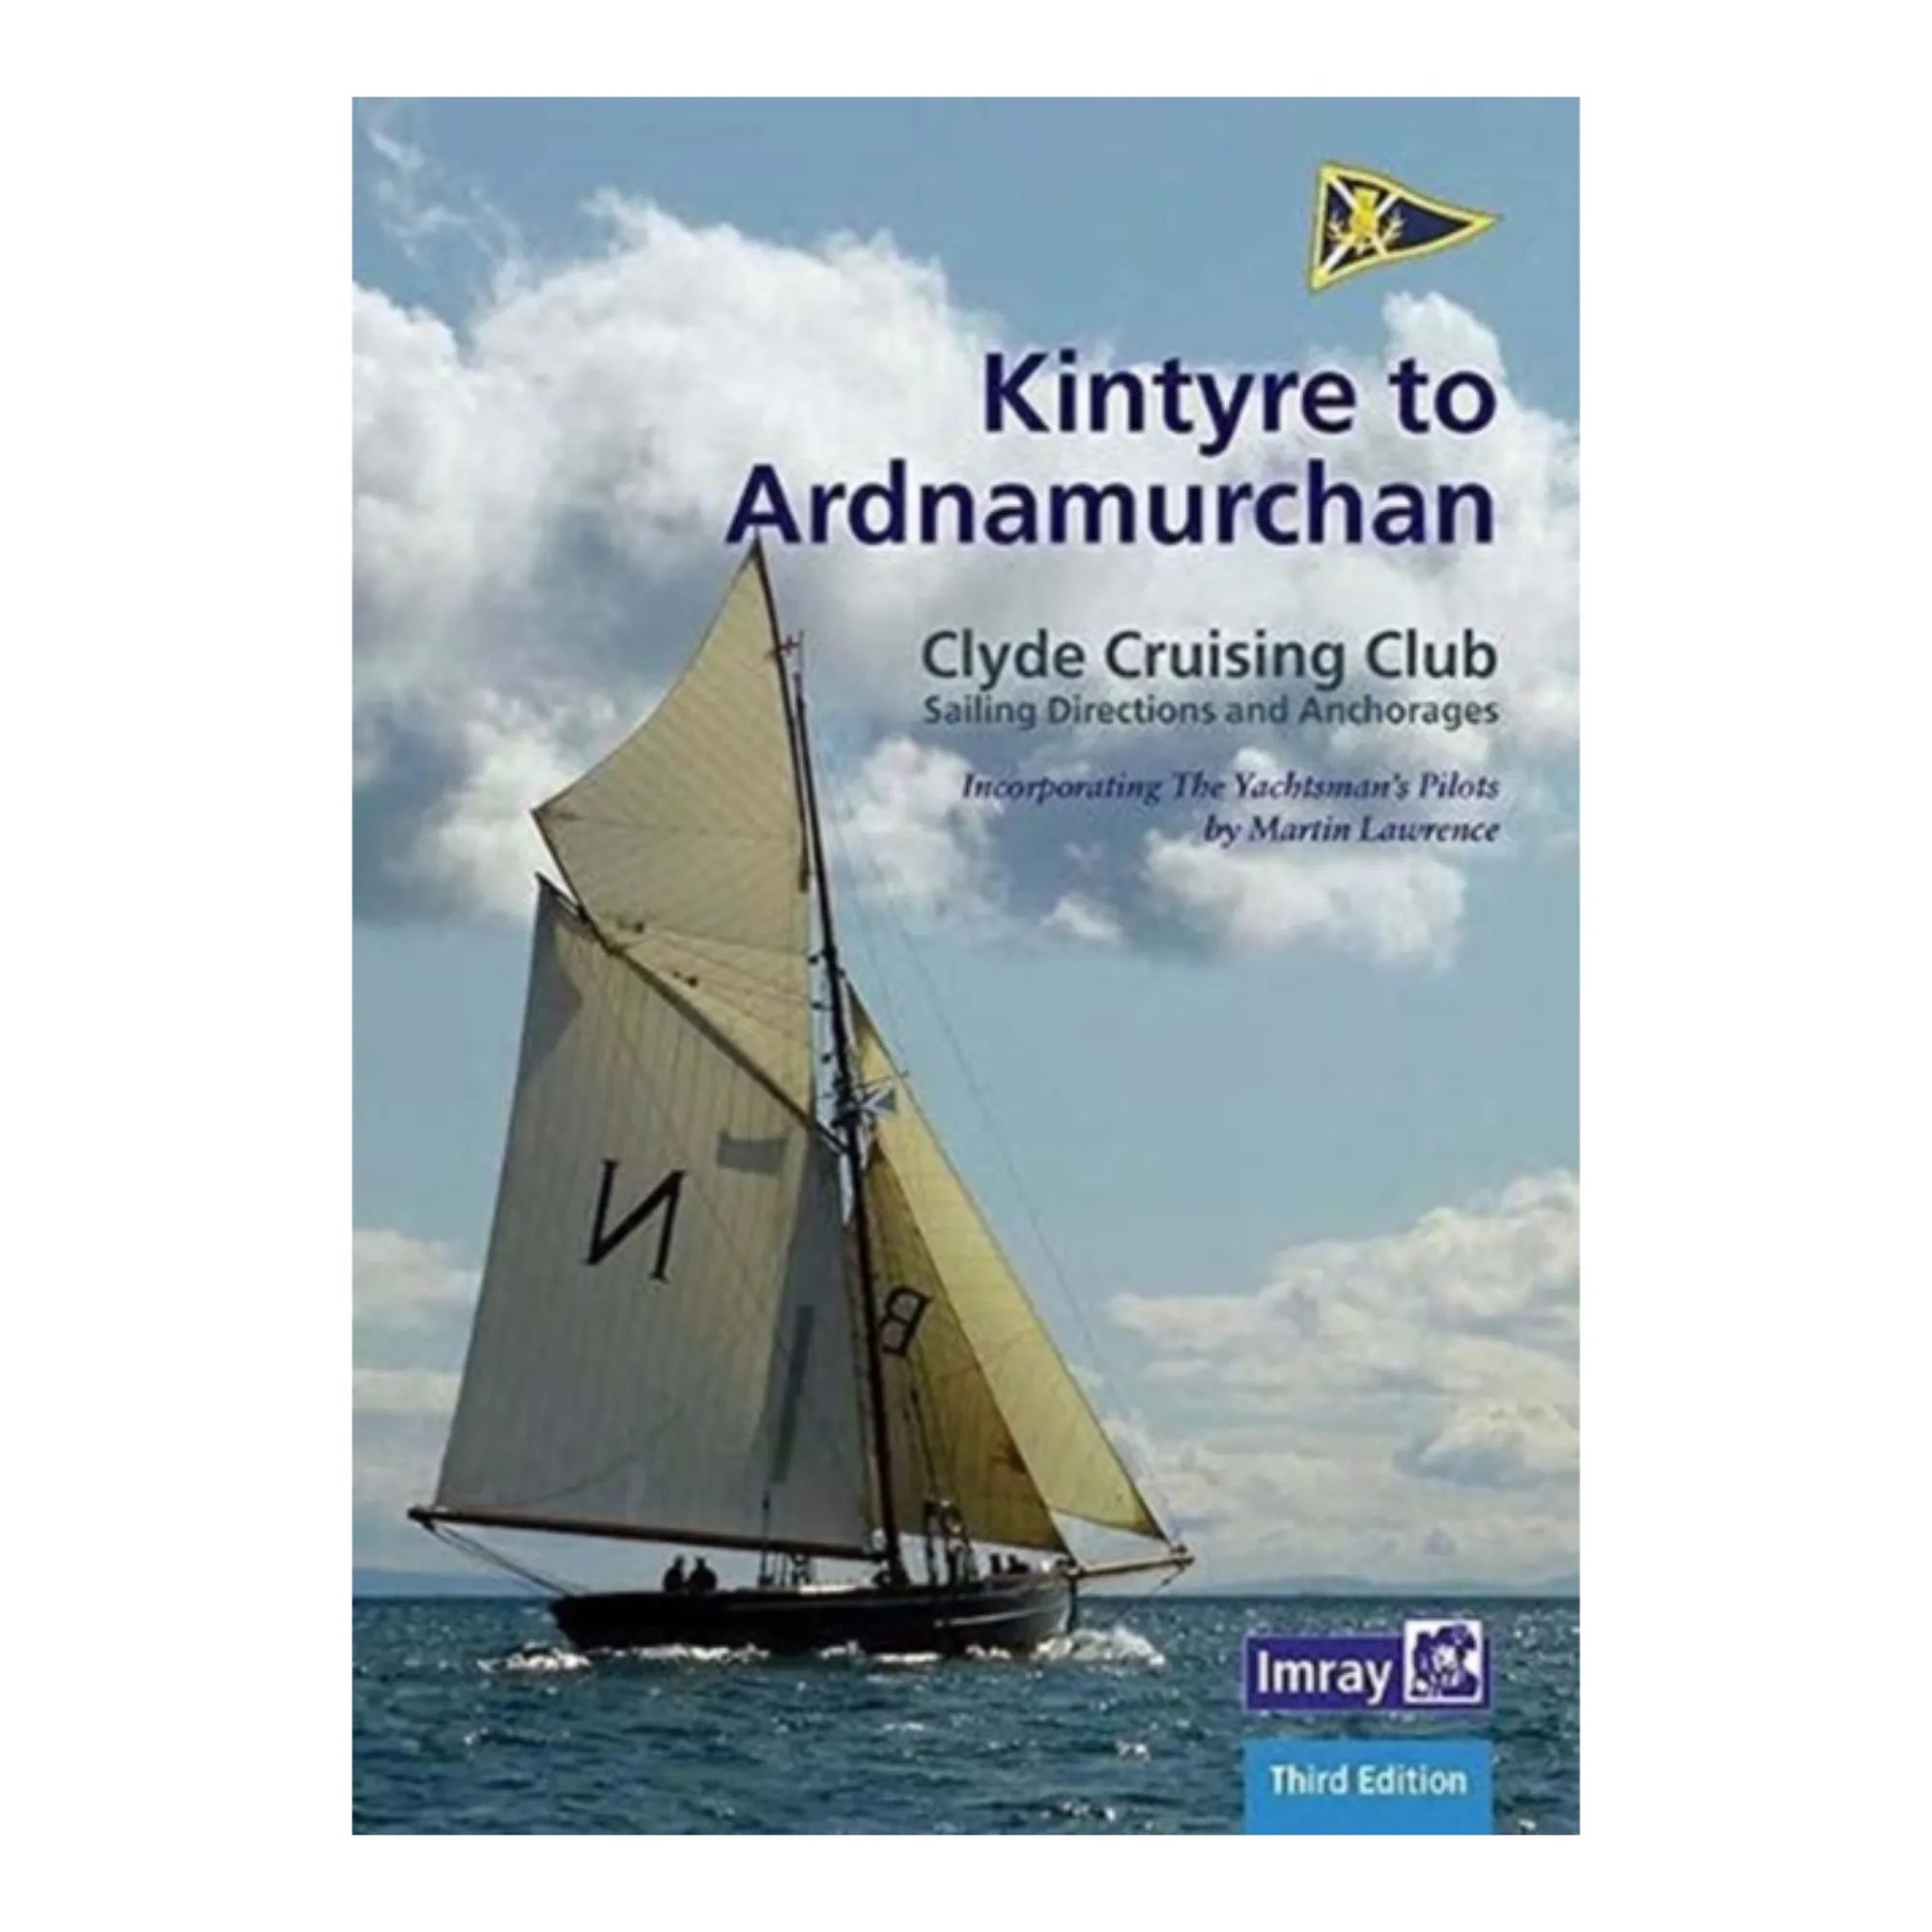 Kintyre to Ardnamurchan (3rd Edition)